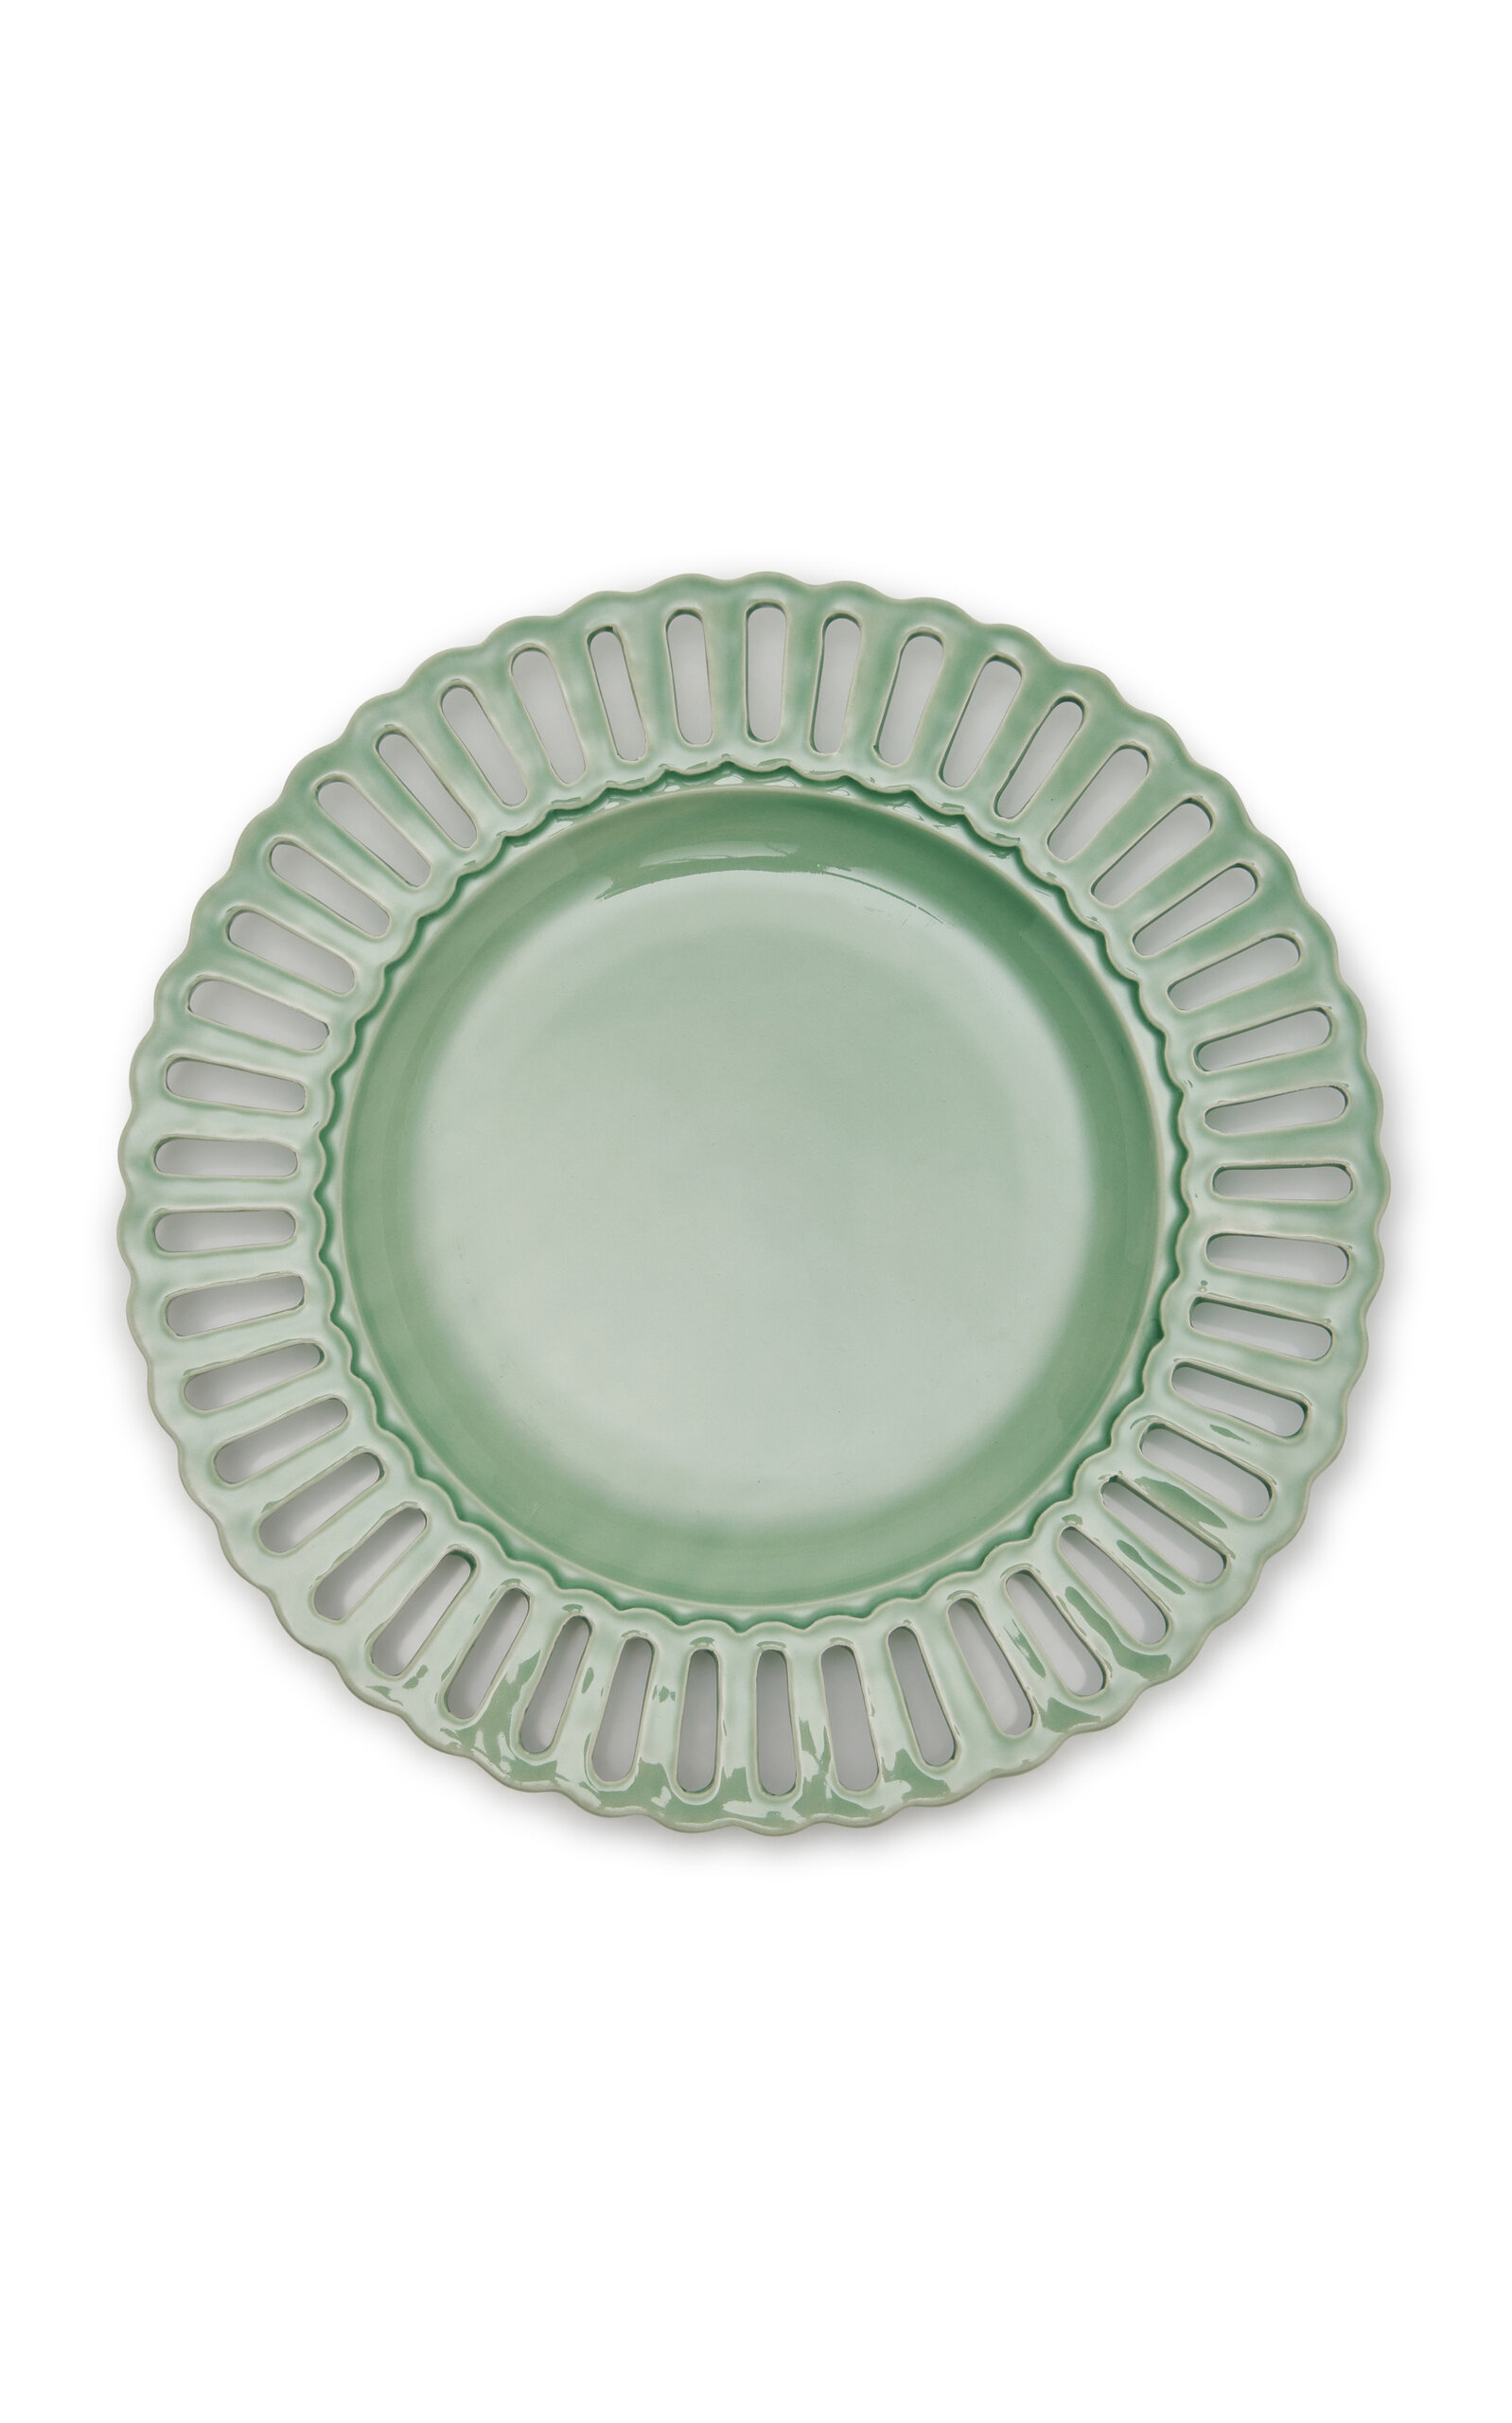 Moda Domus Balconata Creamware Dinner Plate In Green